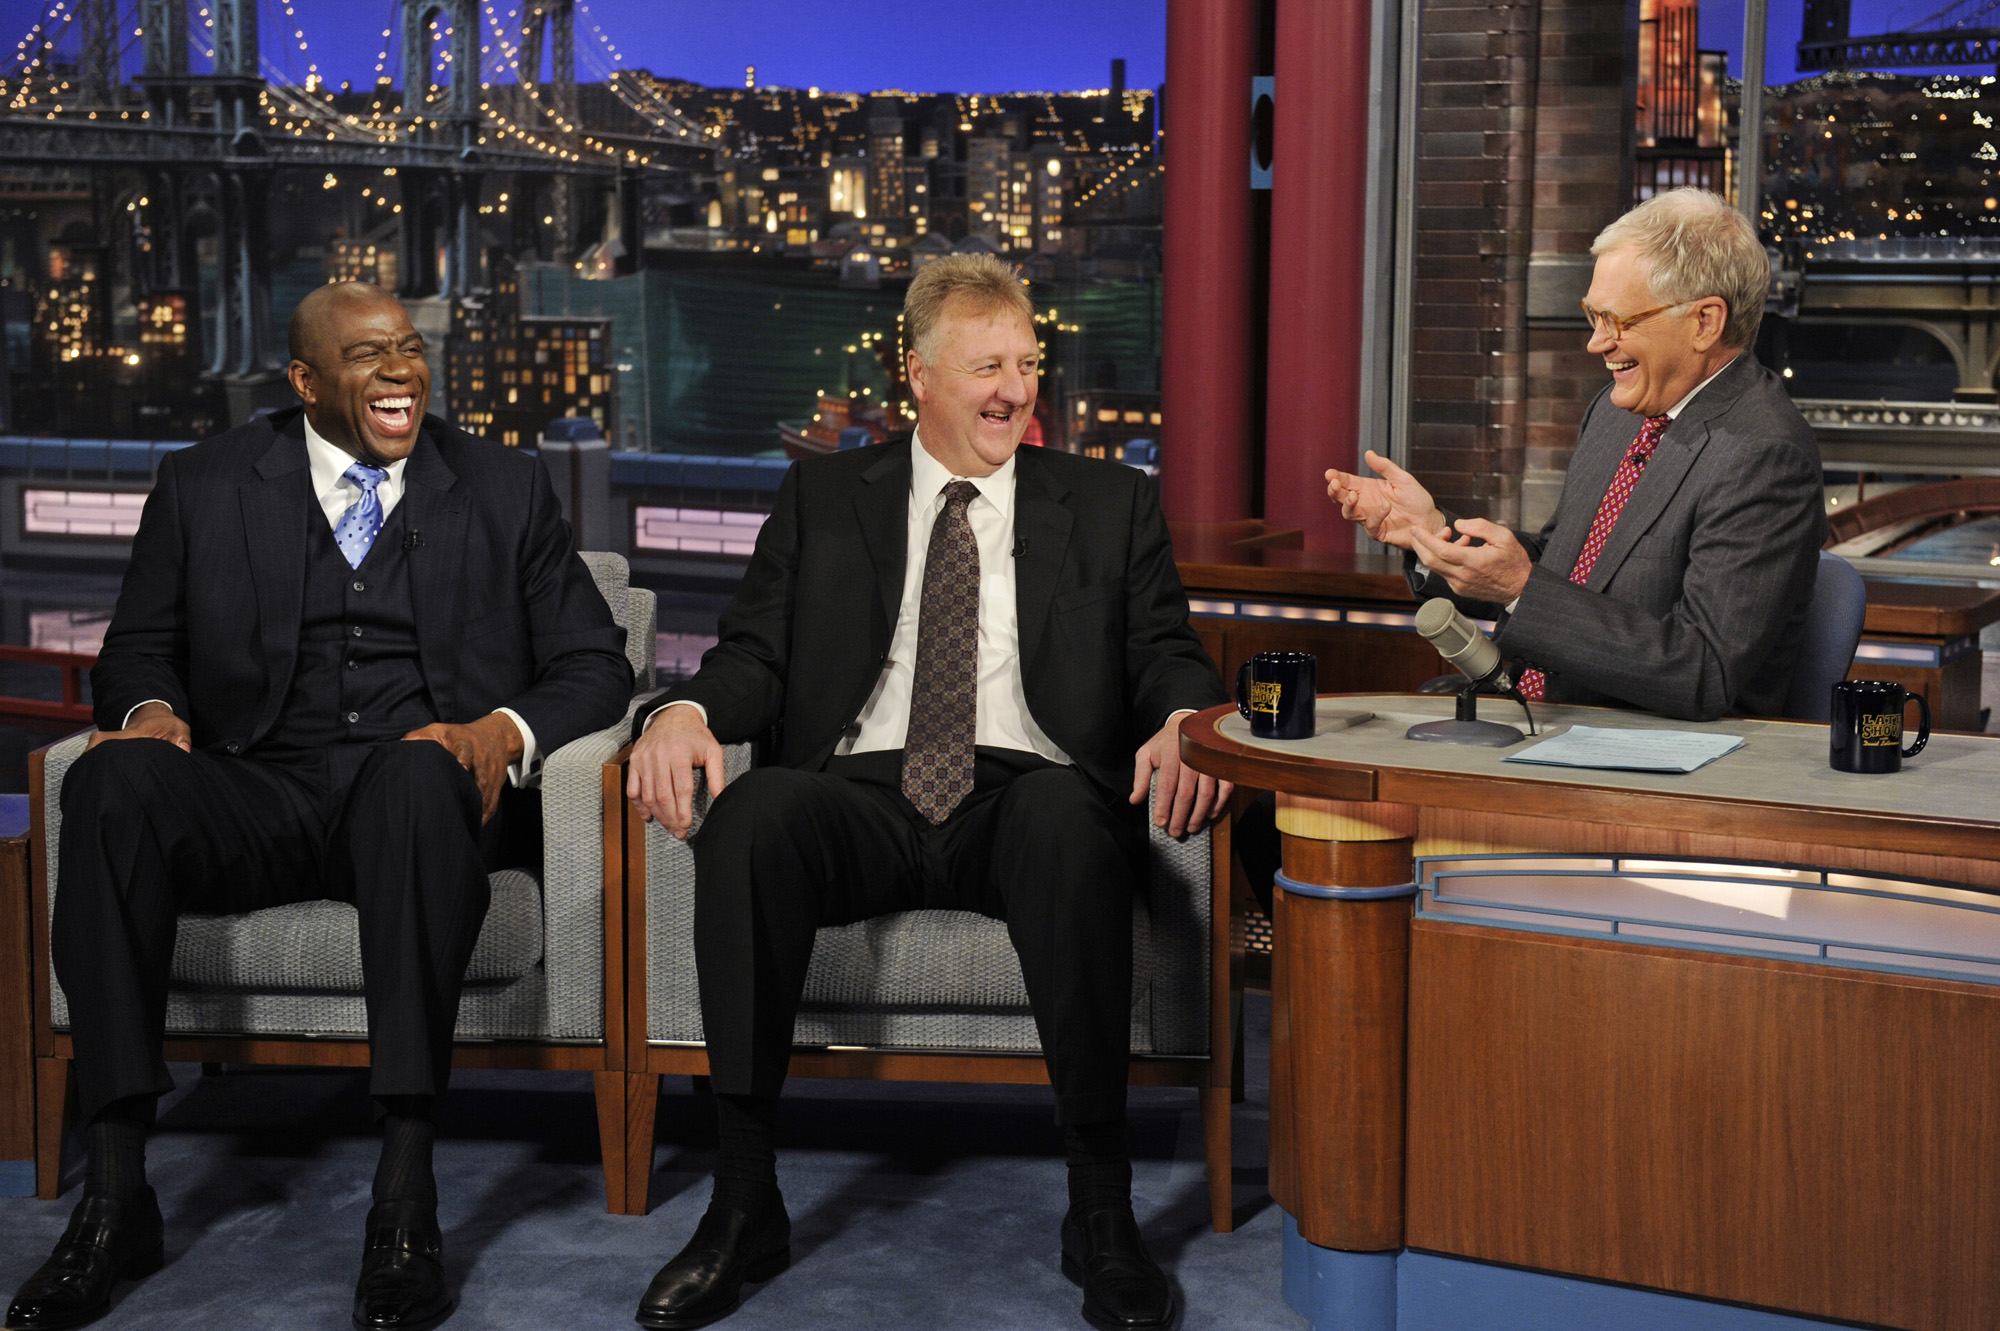 Basketball legends Magic Johnson (left) and Larry Bird (center) talk with David Letterman.